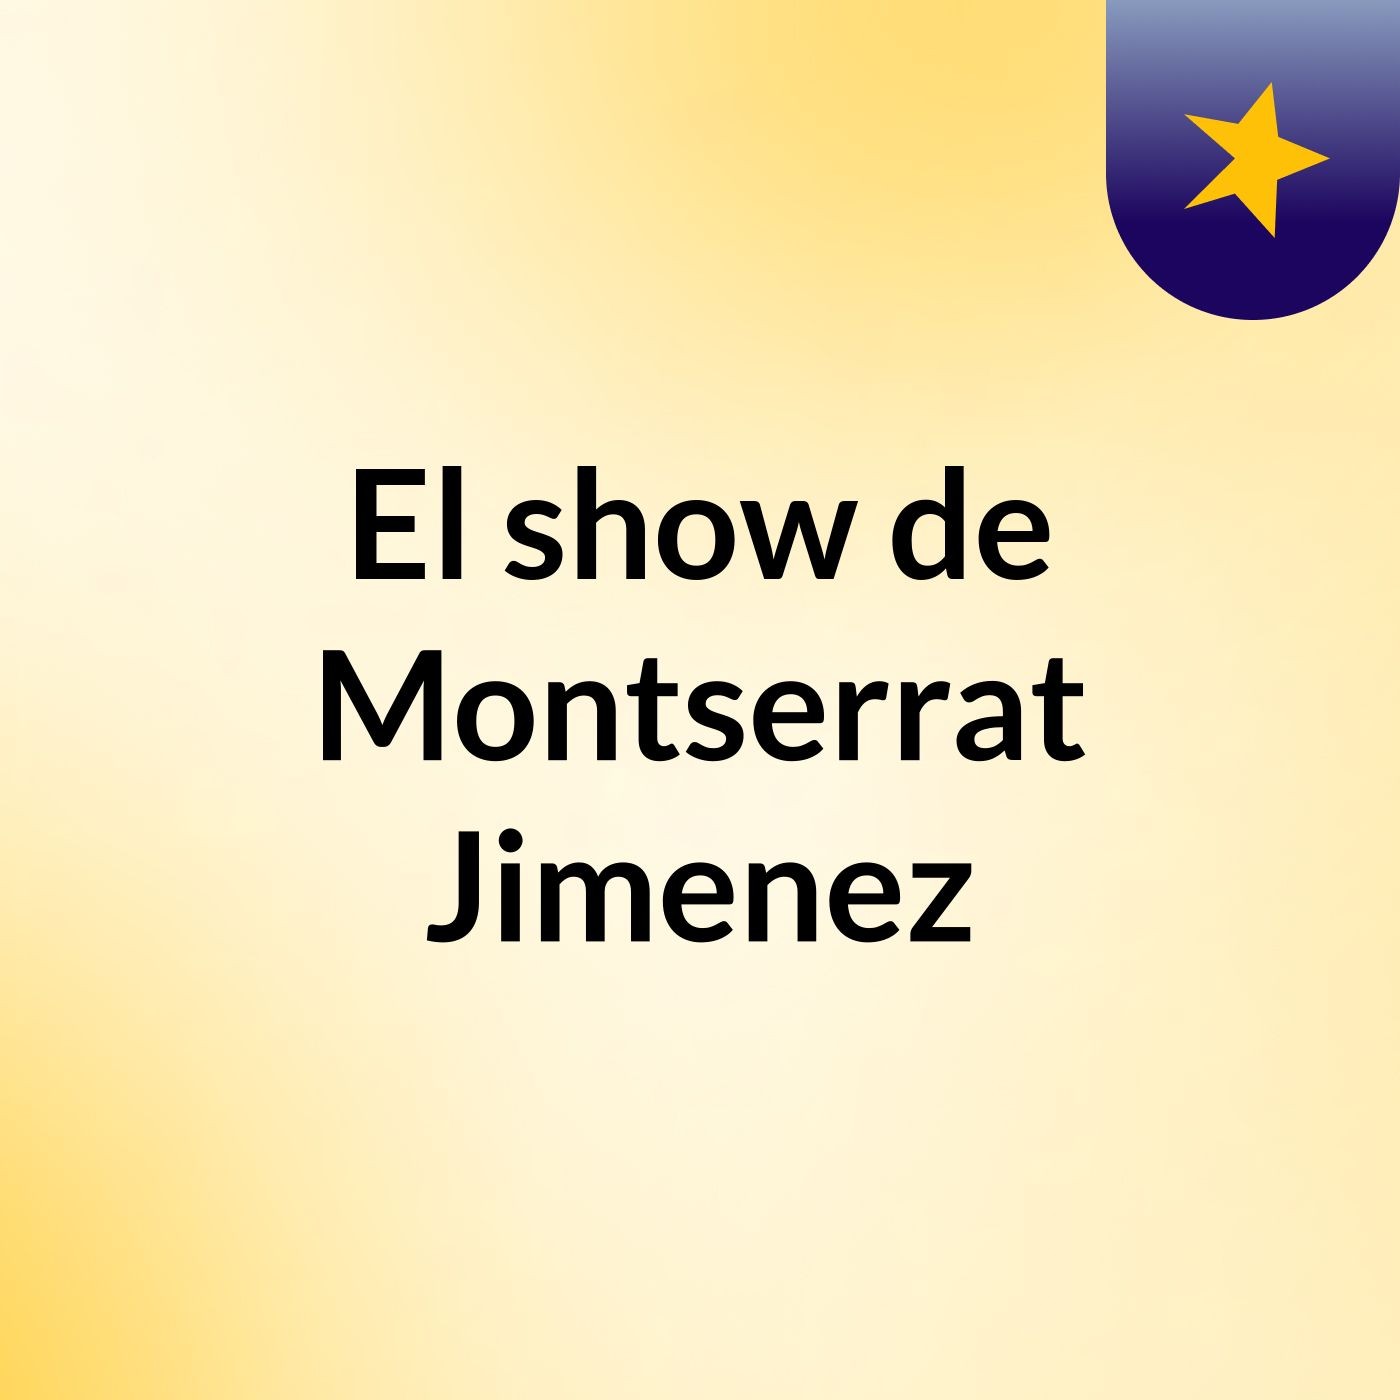 El show de Montserrat Jimenez